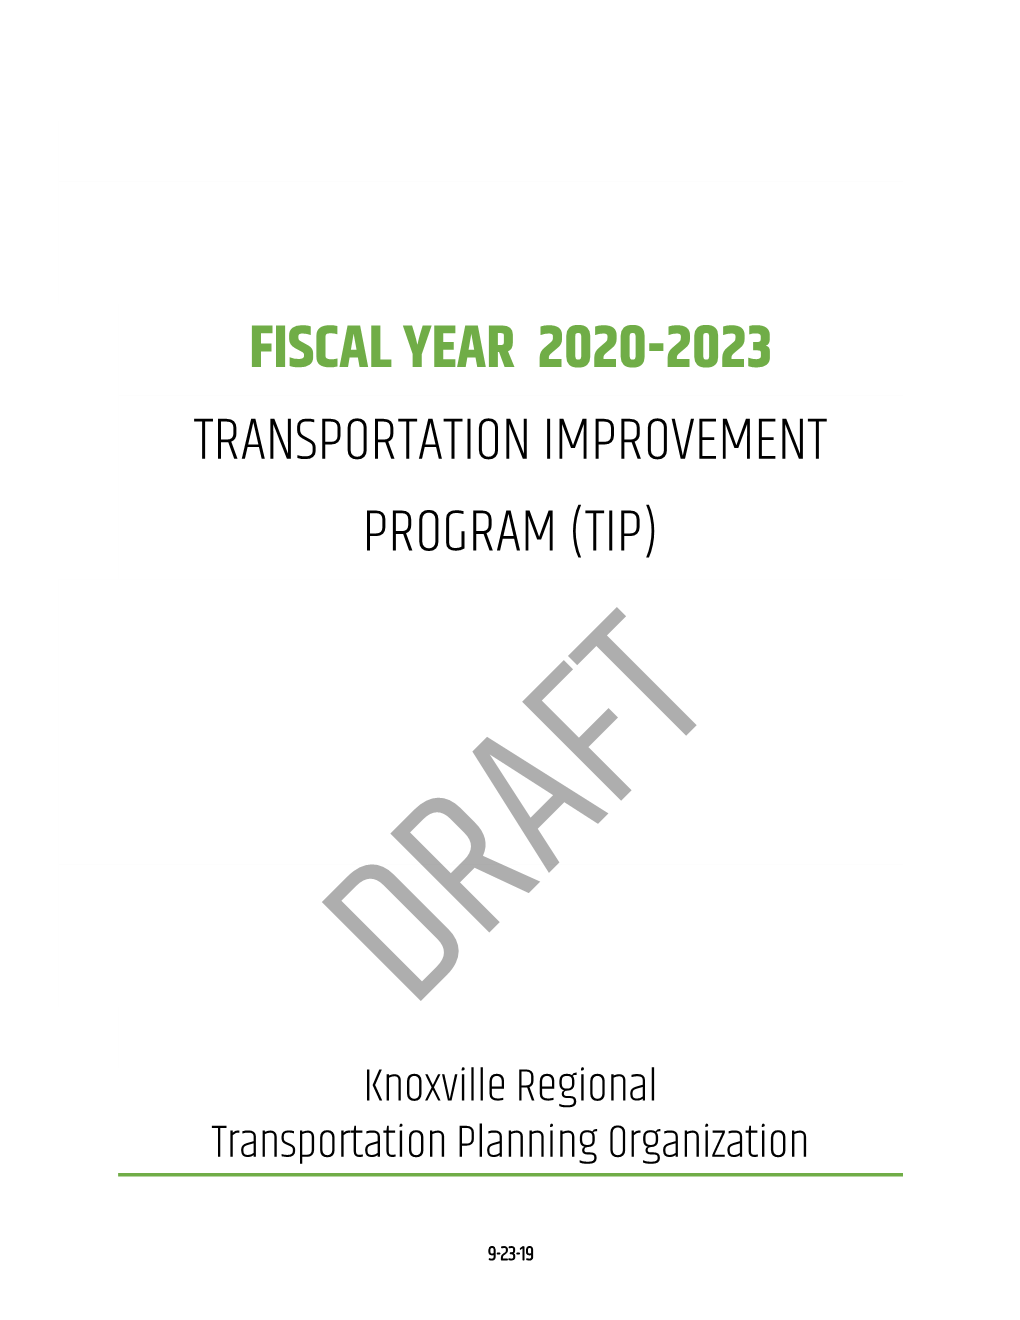 Fiscal Year 2020-2023 Transportation Improvement Program (Tip)